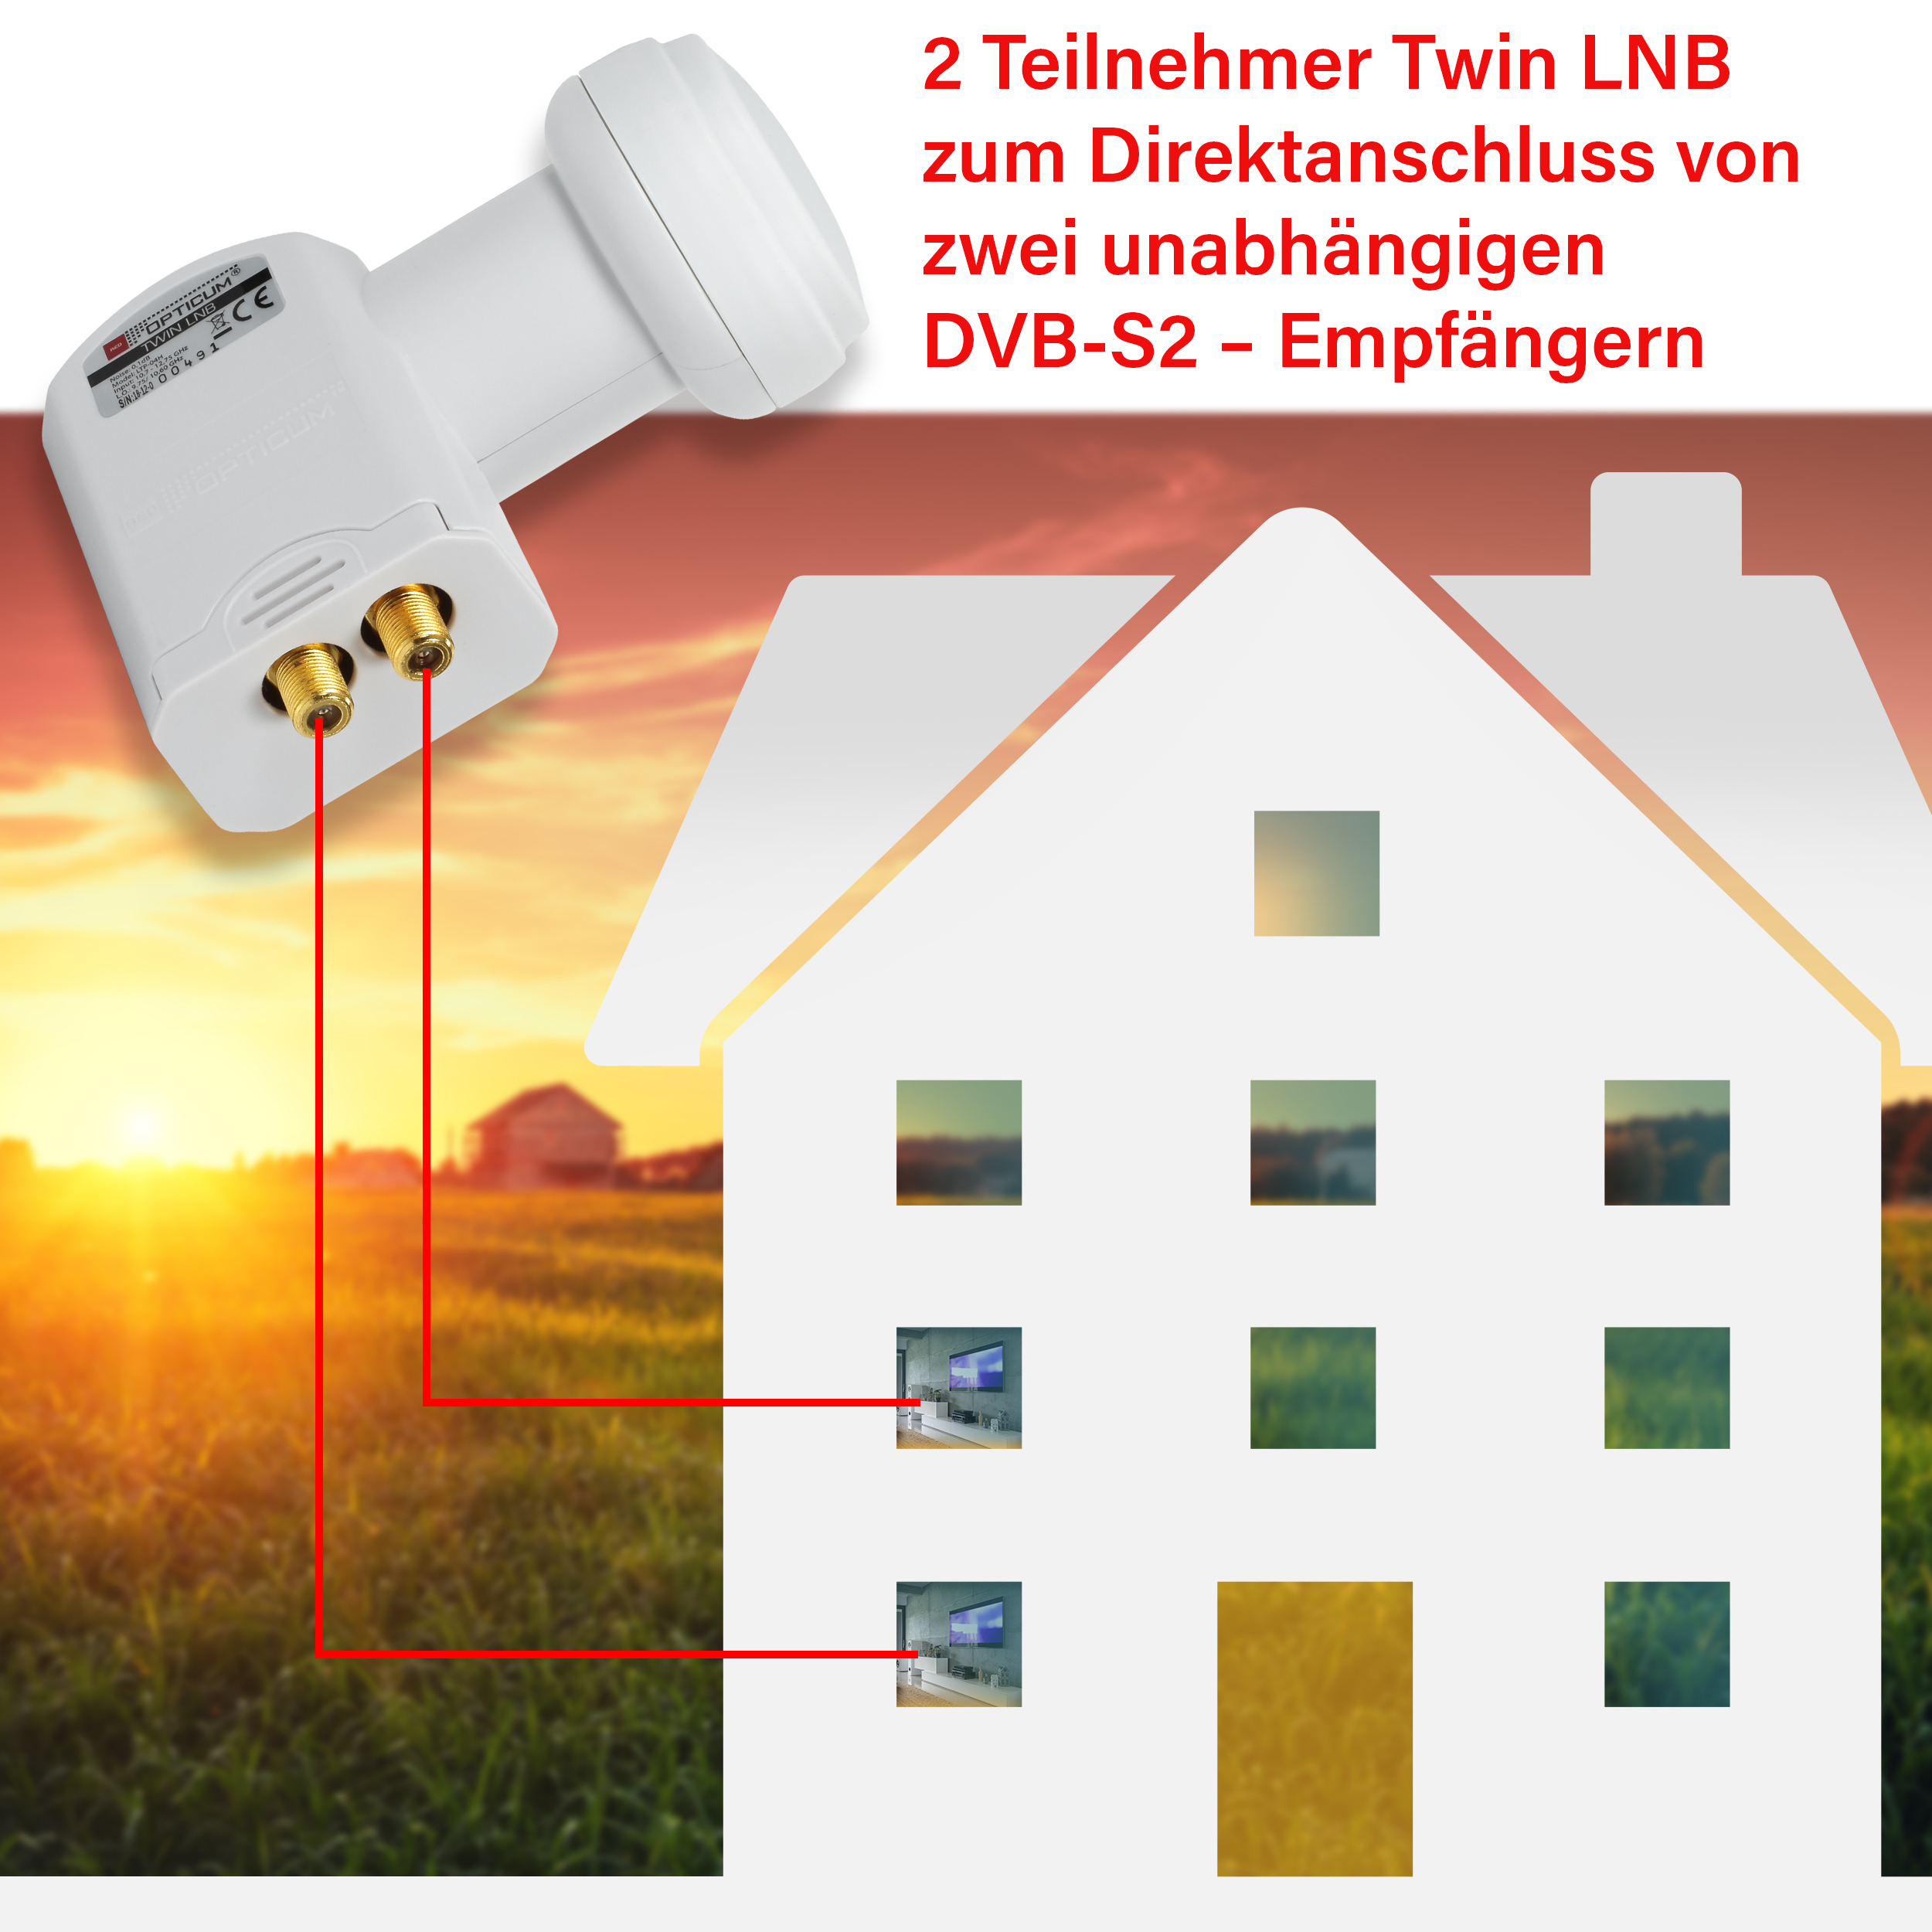 Teilnehmer) QA60 - 4K & Twin LNB 04H anthrazit HD RED OPTICUM mit cm, Satellitenanlage LTP 3D (60 fähig Sat LNB Twin Antenne LTP-04H - Alu 2